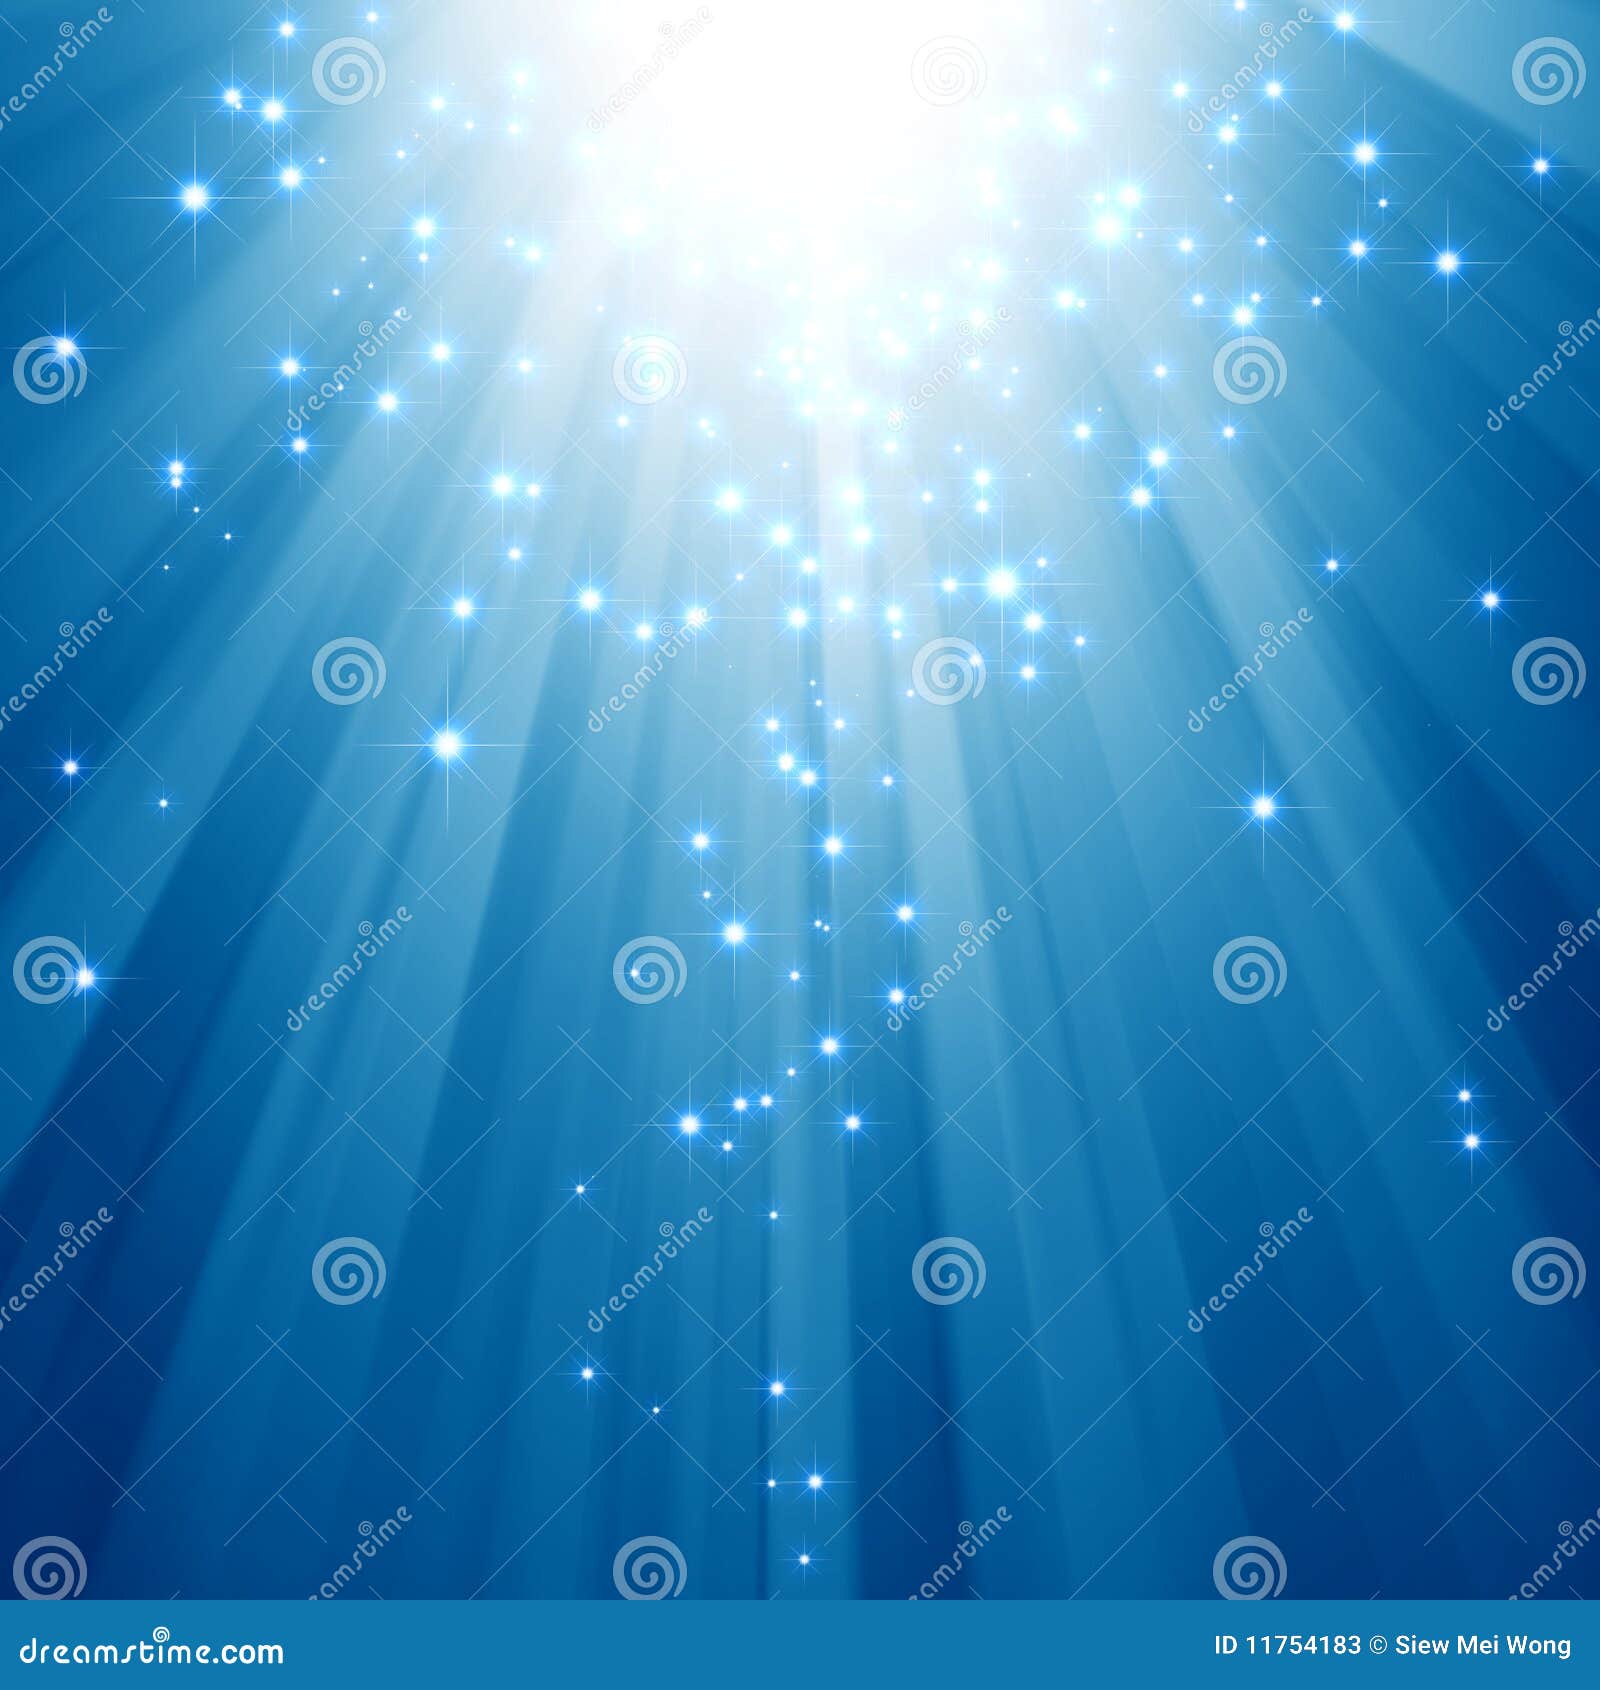 blue light beams with glitter stars